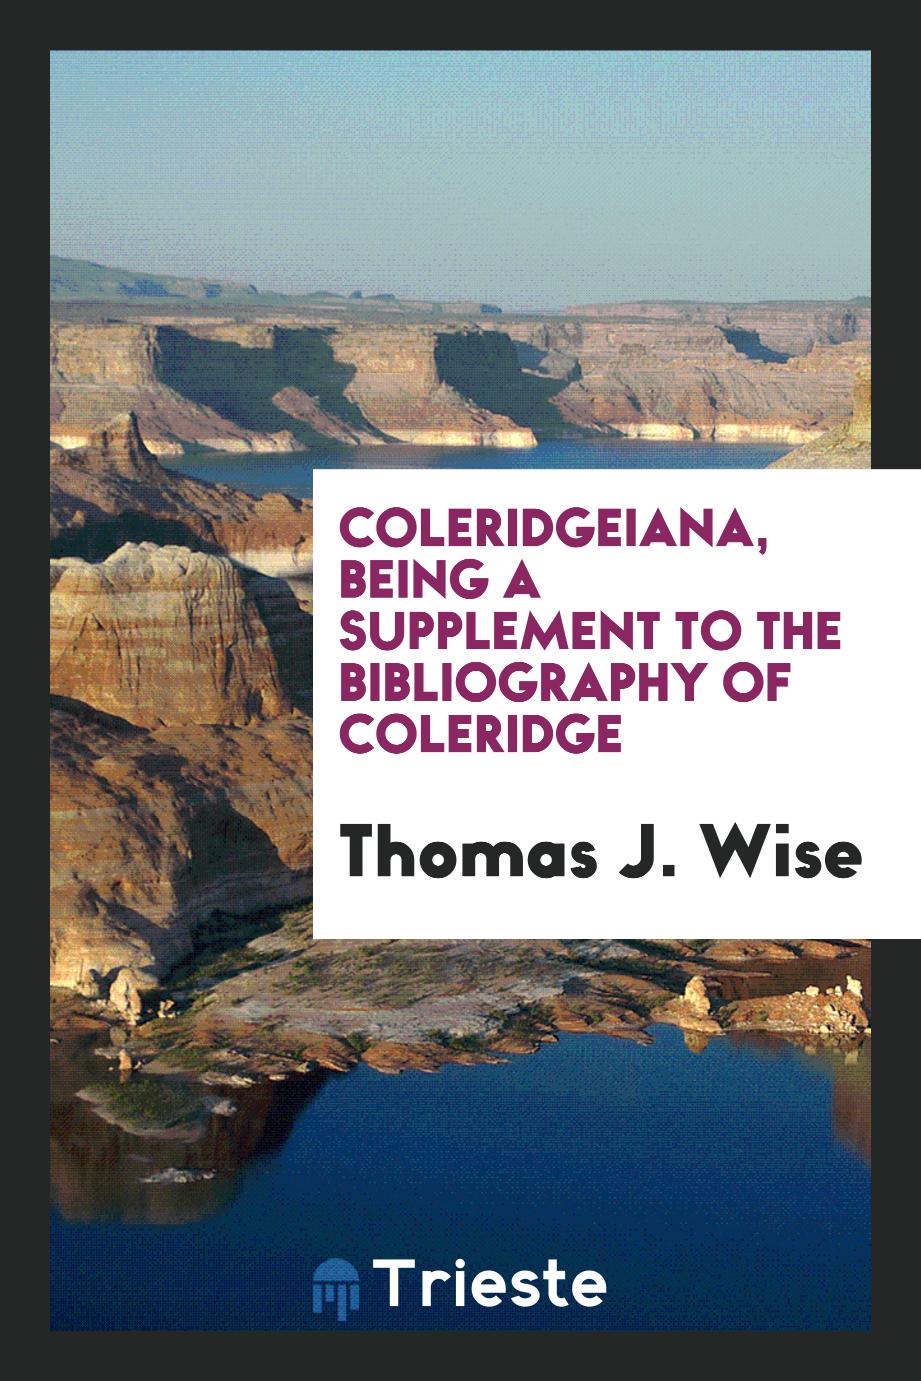 Coleridgeiana, being a supplement to the Bibliography of Coleridge